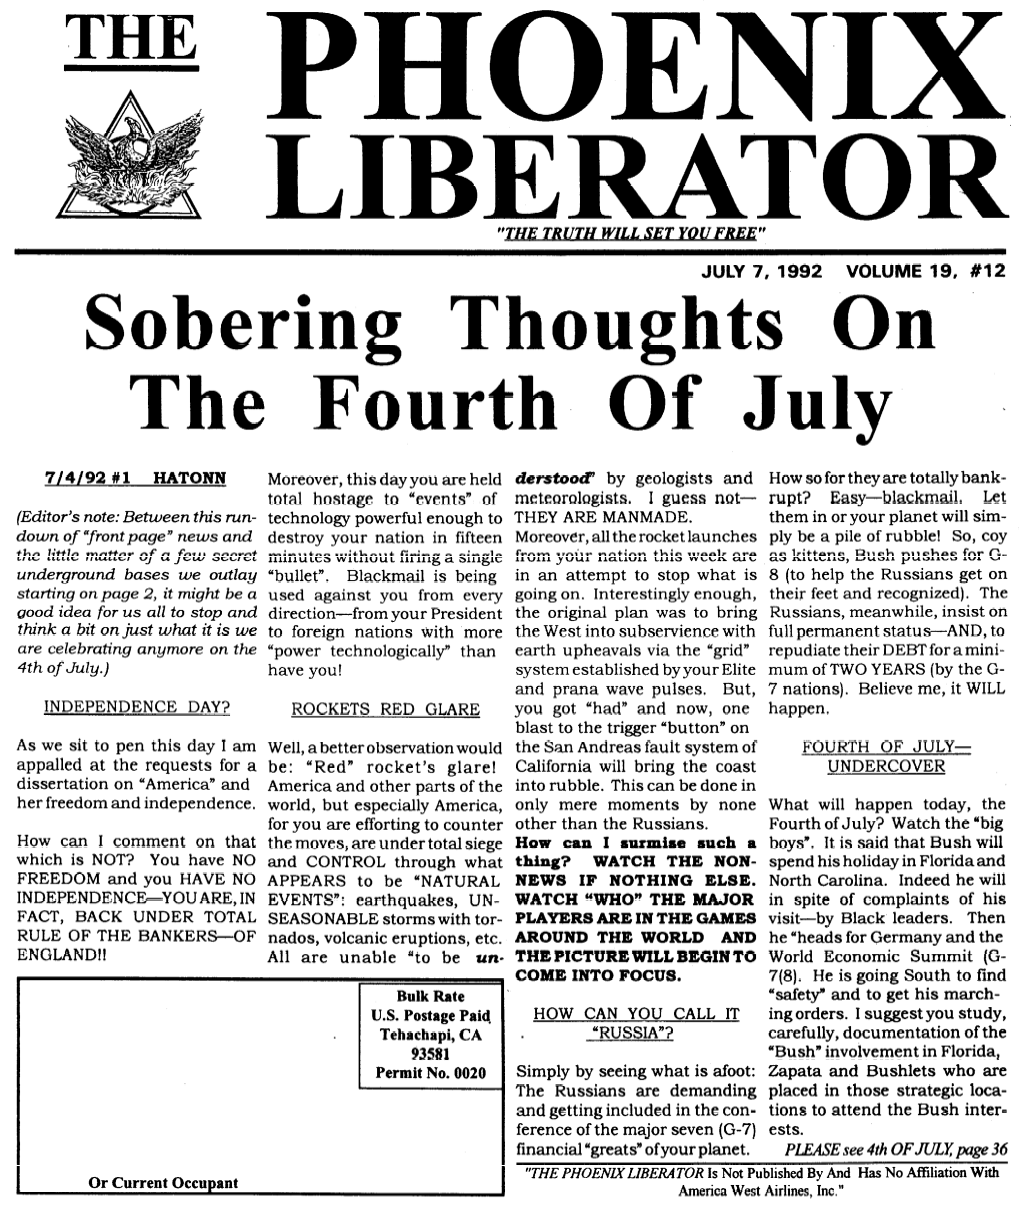 THE PHOENIX LIBERATOR, July 7, 1992